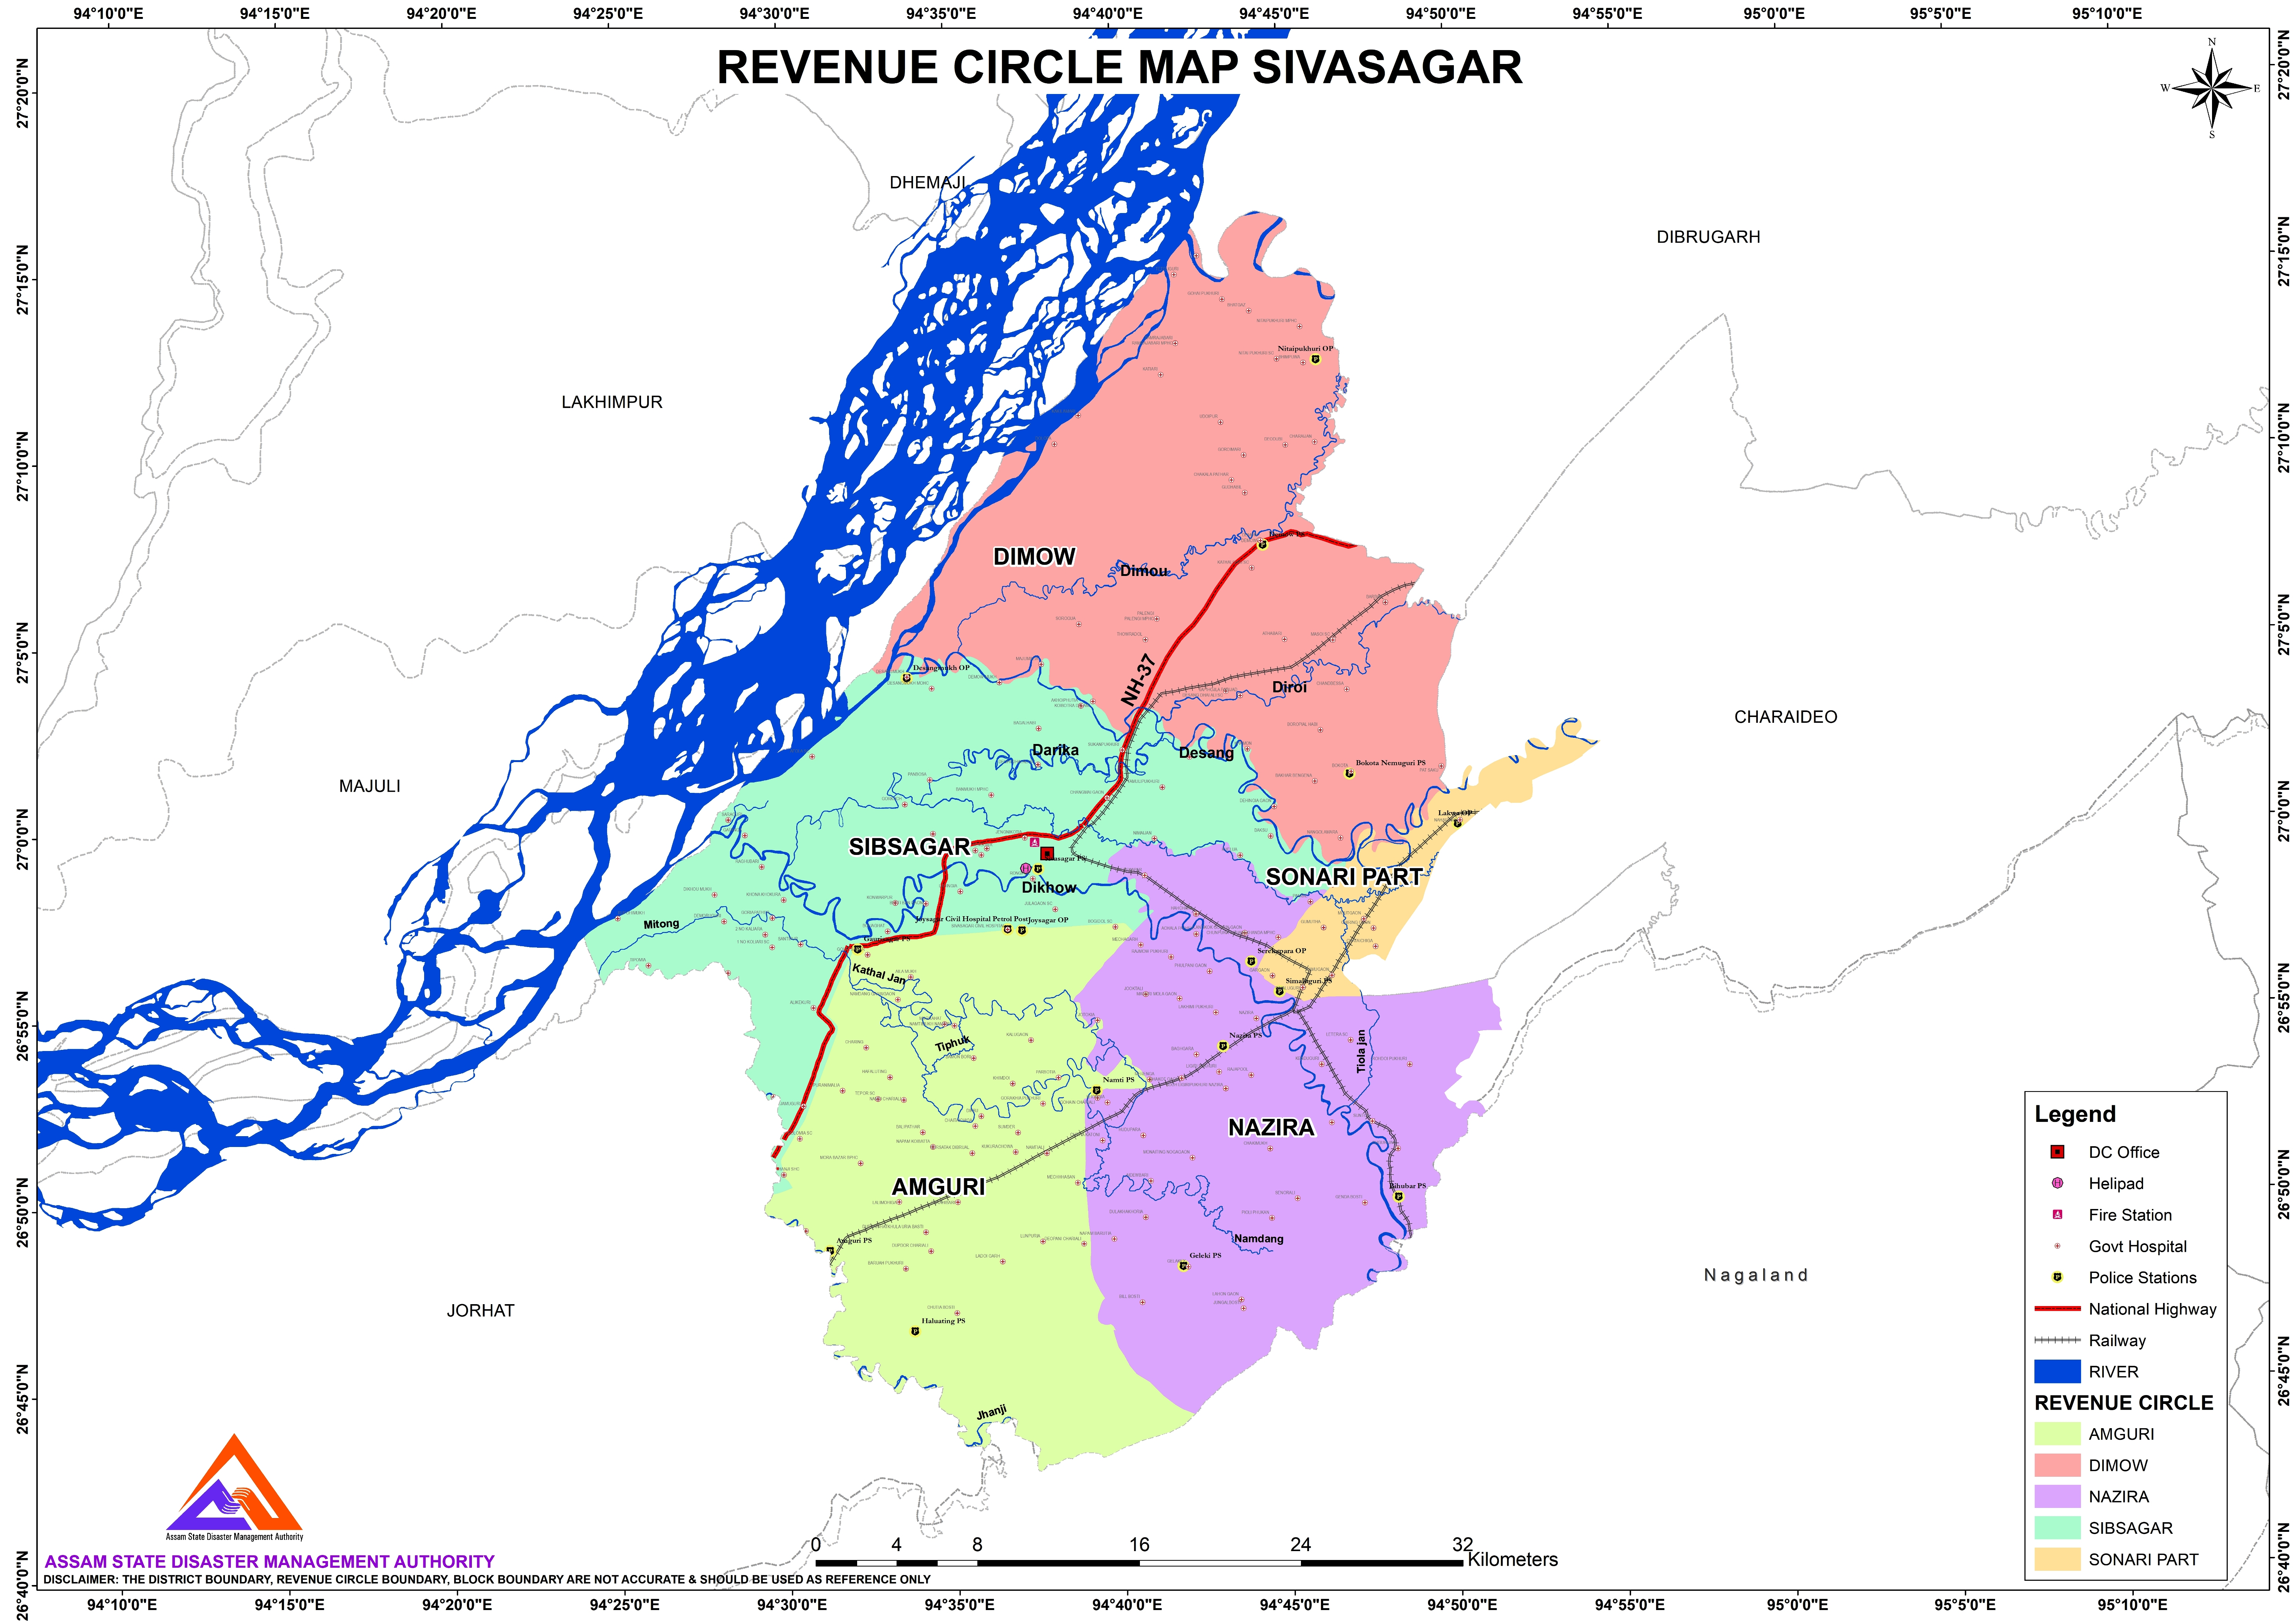 Sivasagar District